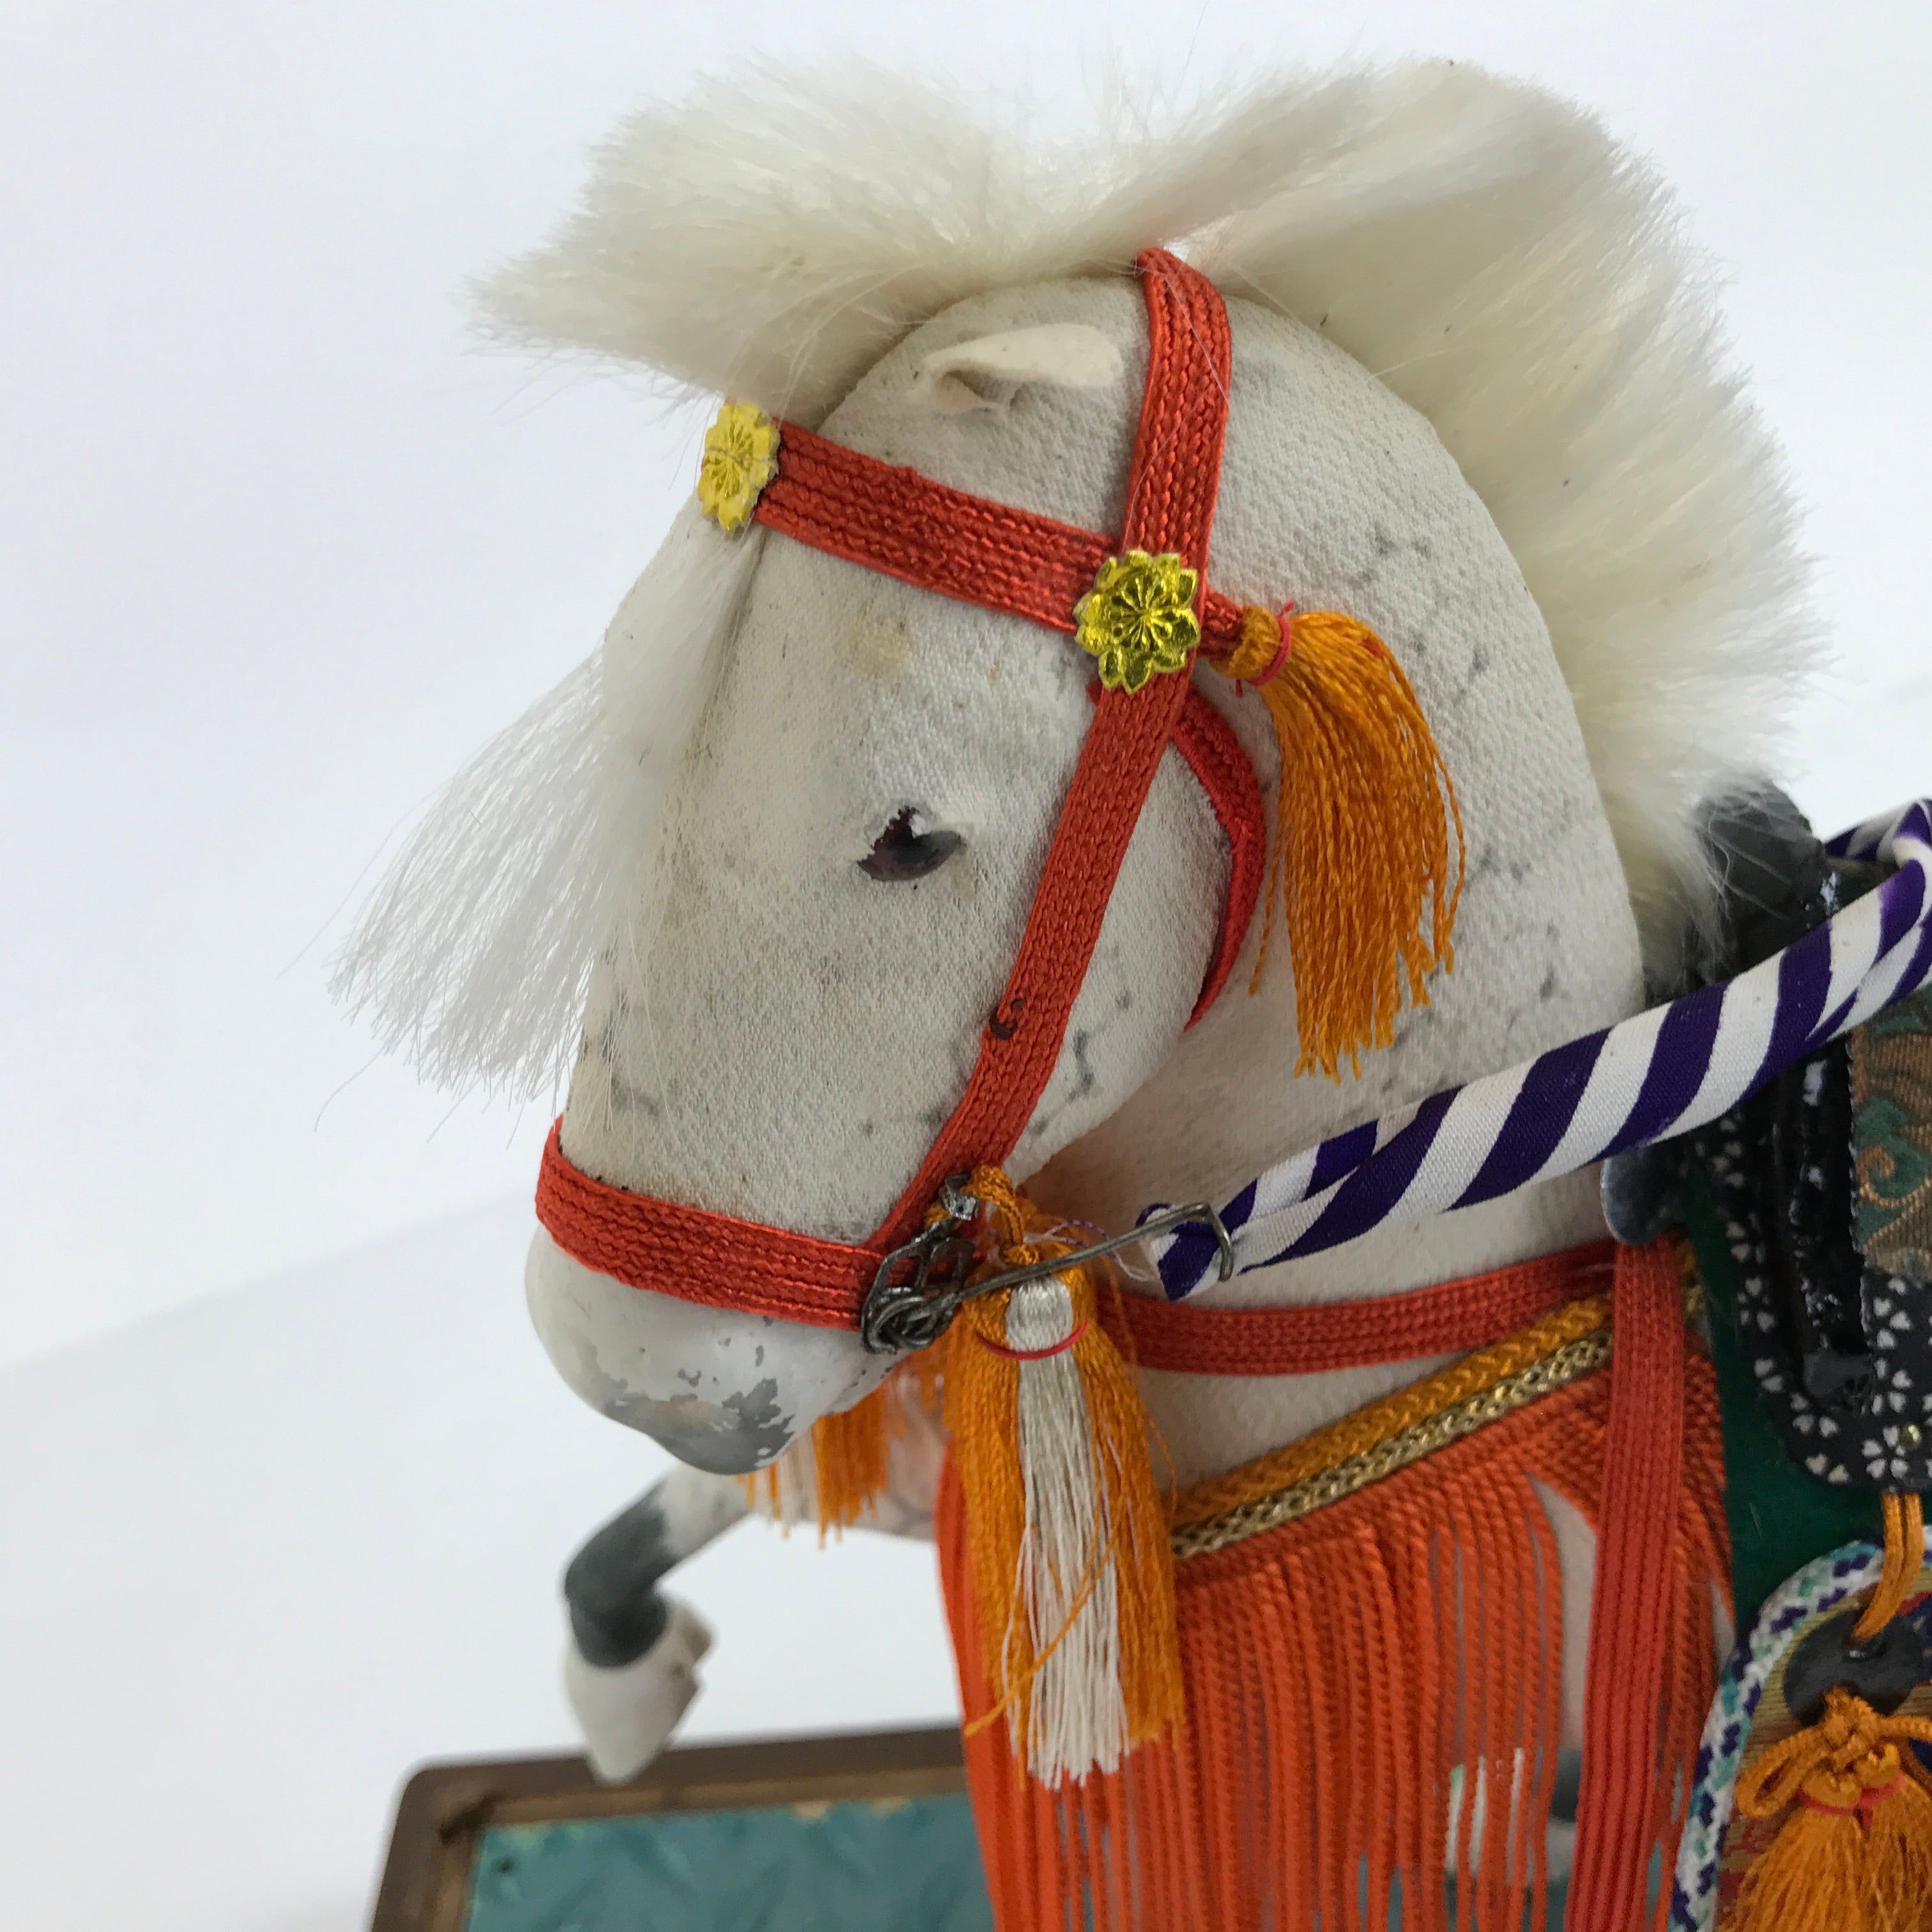 Japanese Gogatsu Ningyo White Horse Figurine Vtg Boys Day Festival Display ID559